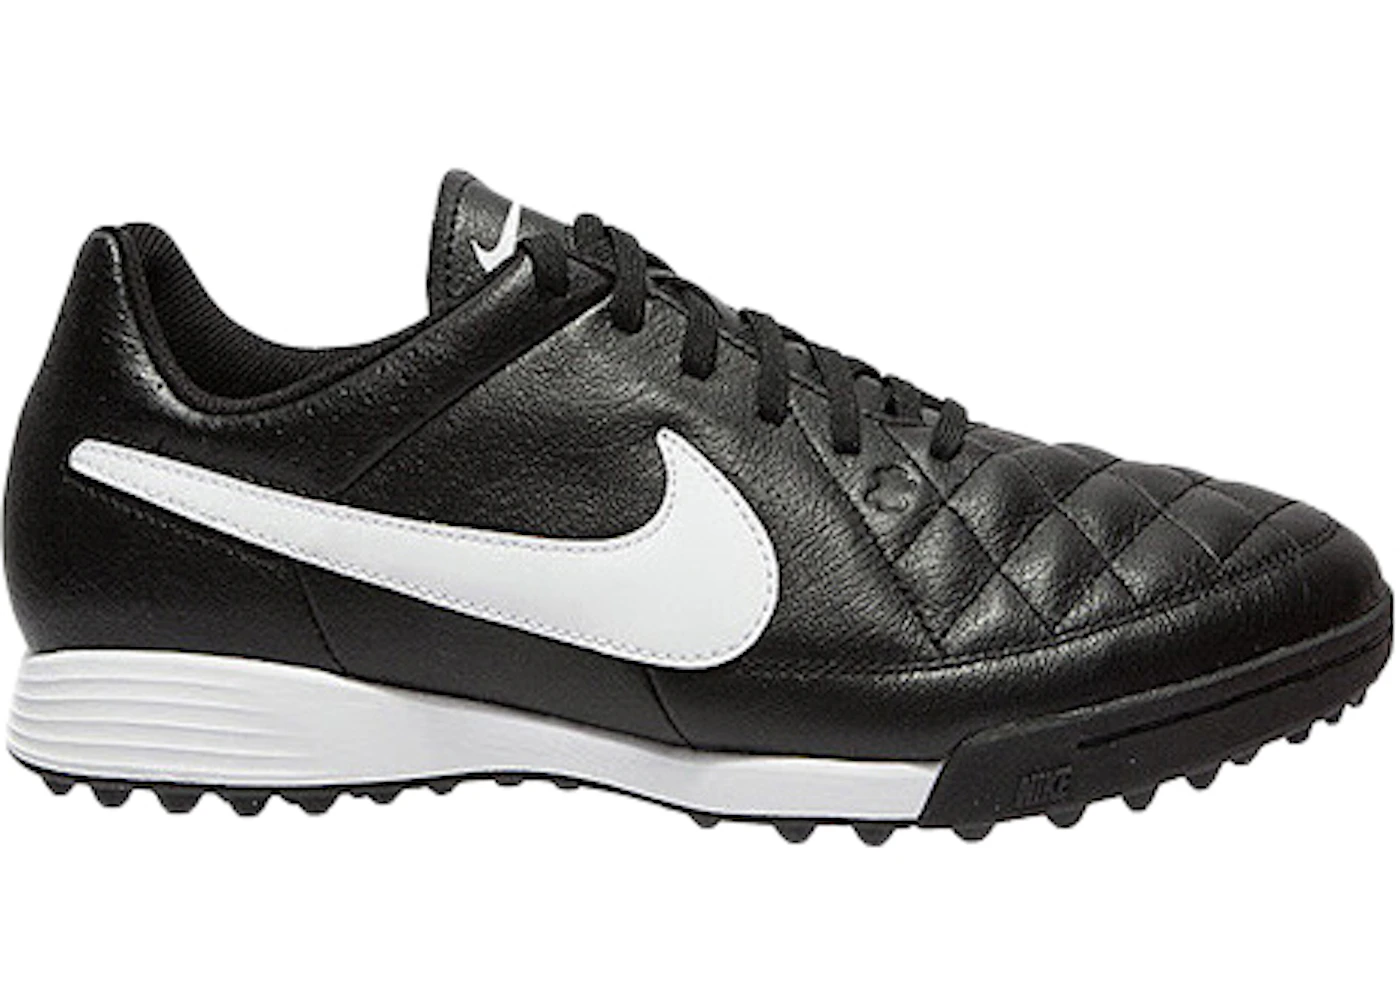  Nike  Tiempo Genio Turf  Soccer Cleats  Black White 631284 010